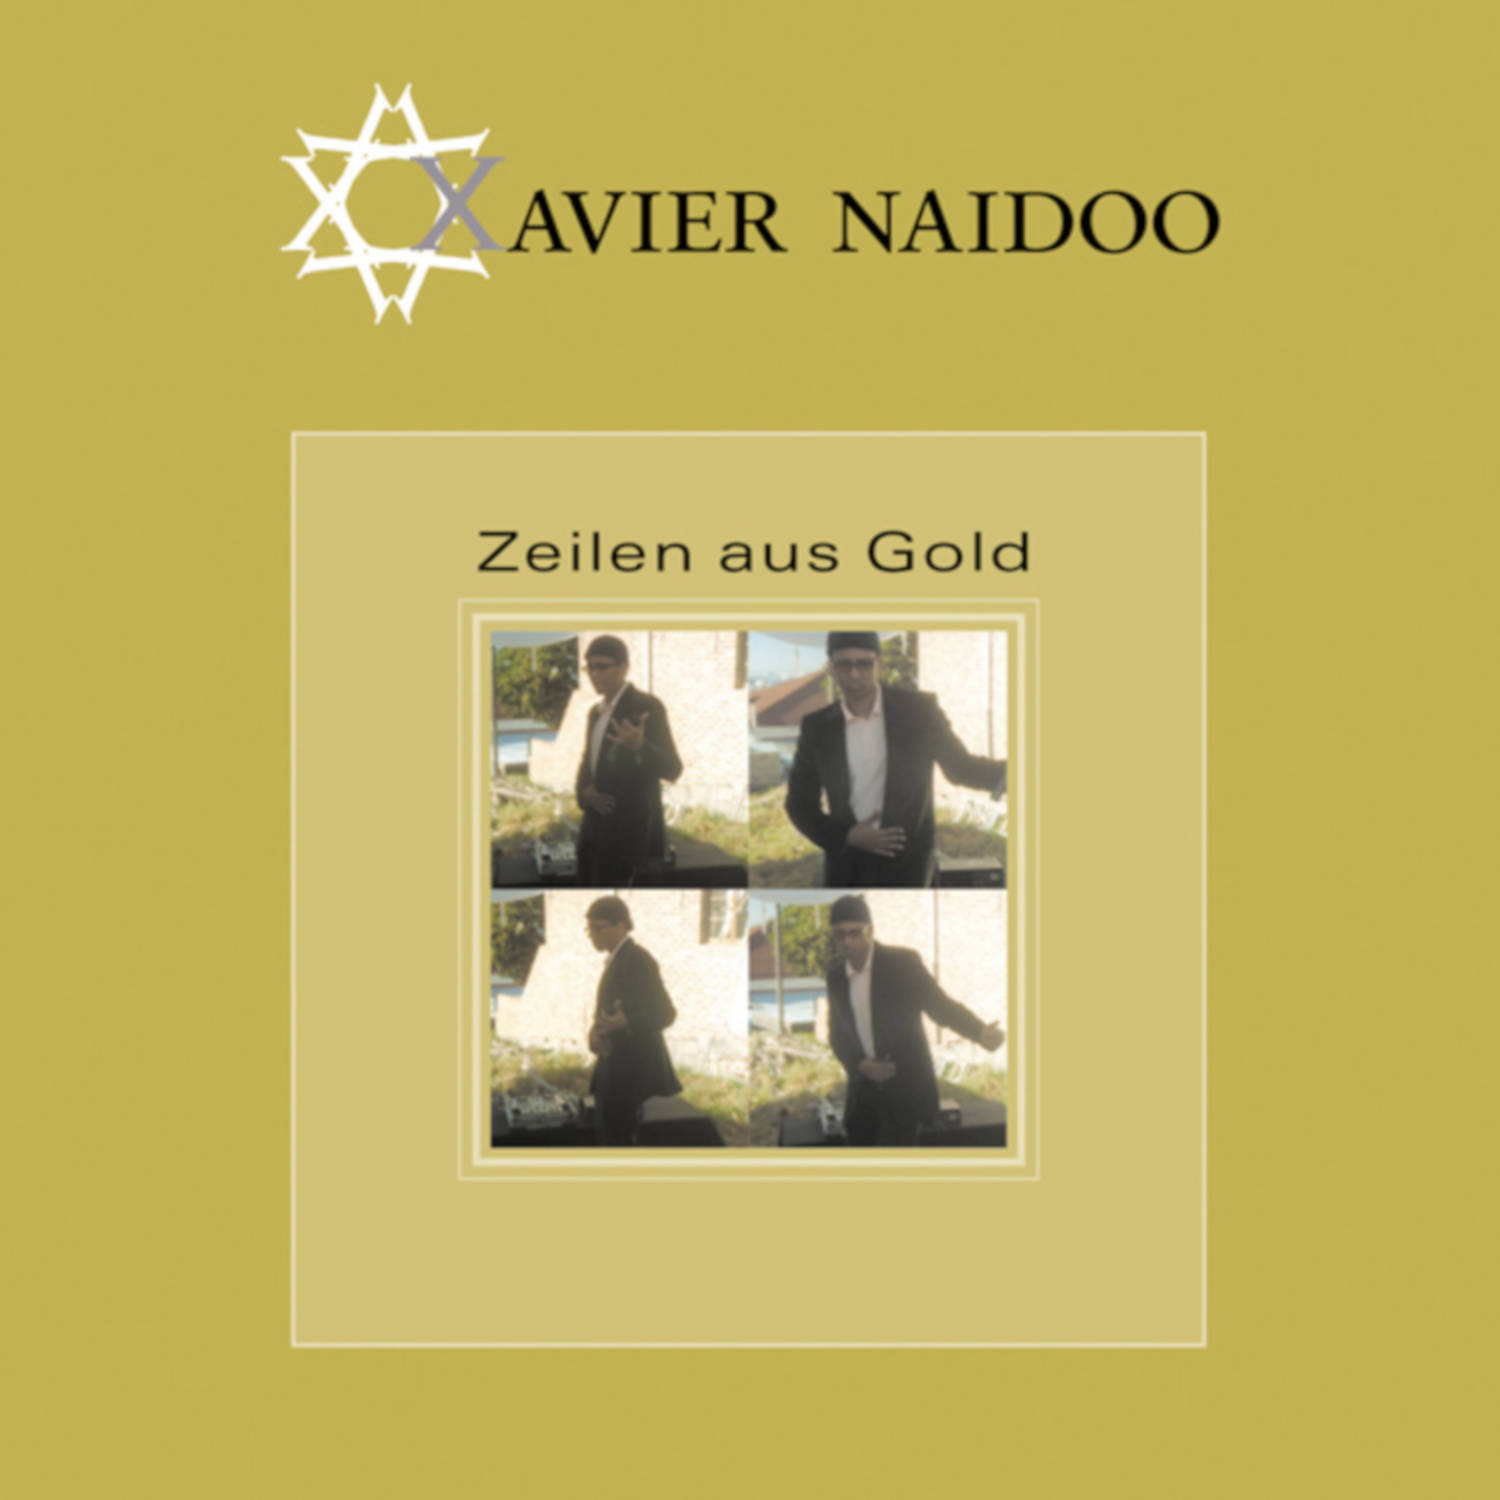 Zeilen aus Gold (Aural Float Treatment Remix)